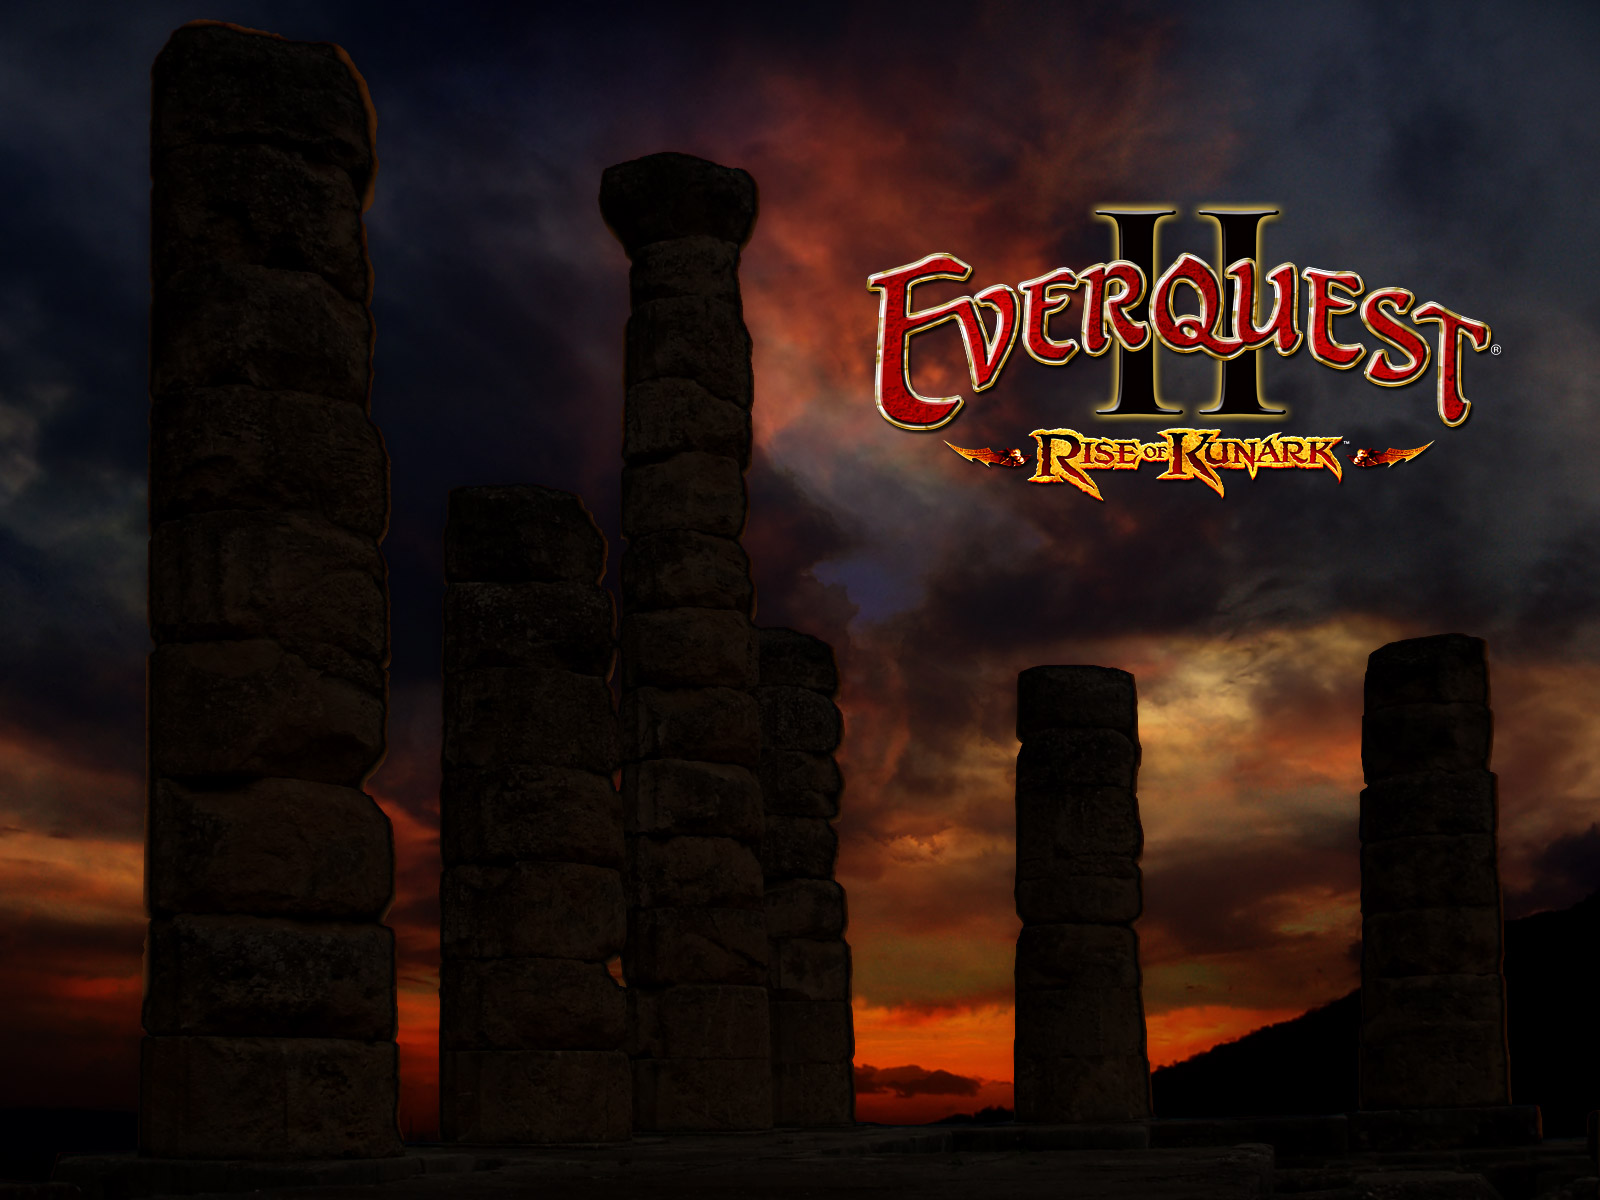 Everquest Rise Of Kunark Wallpaper Gallery Best Game